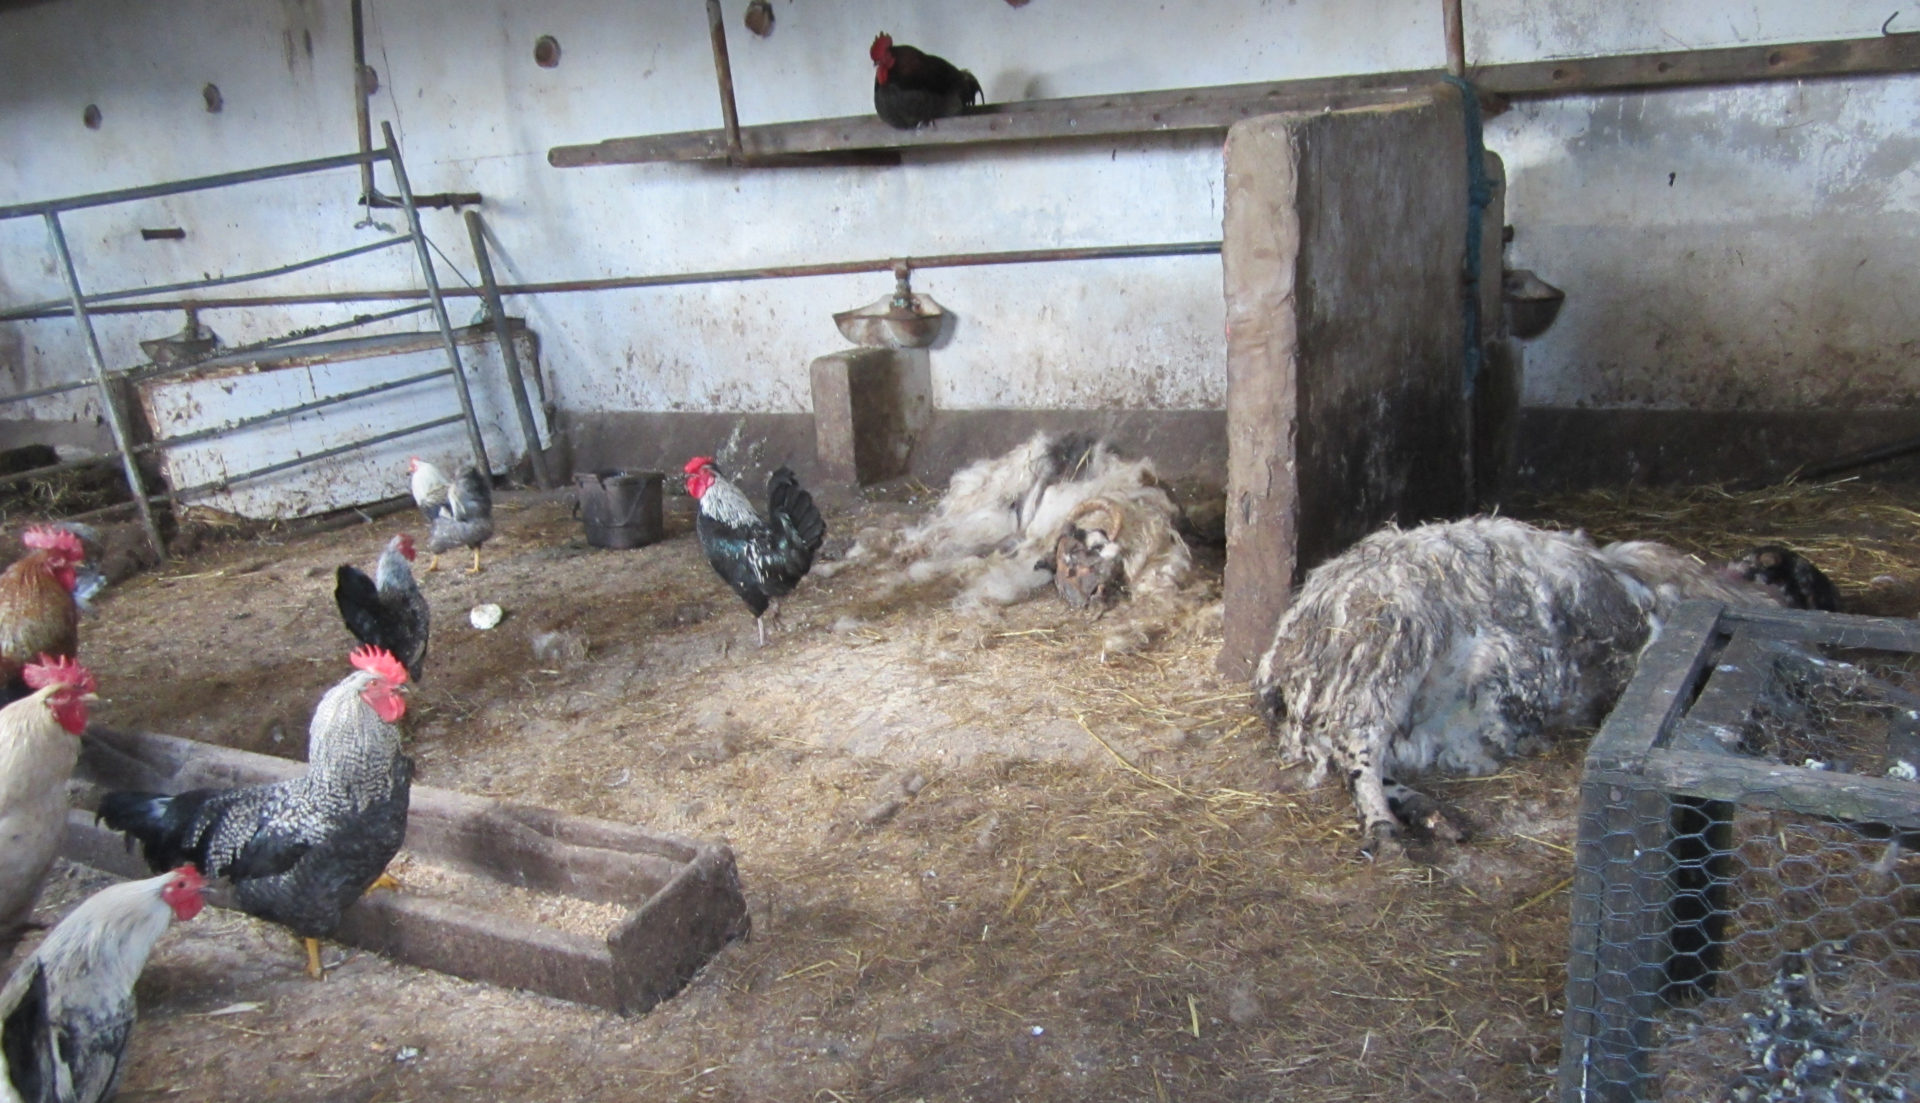 Chickens near an unburied sheep carcass. Image: ISPCA News